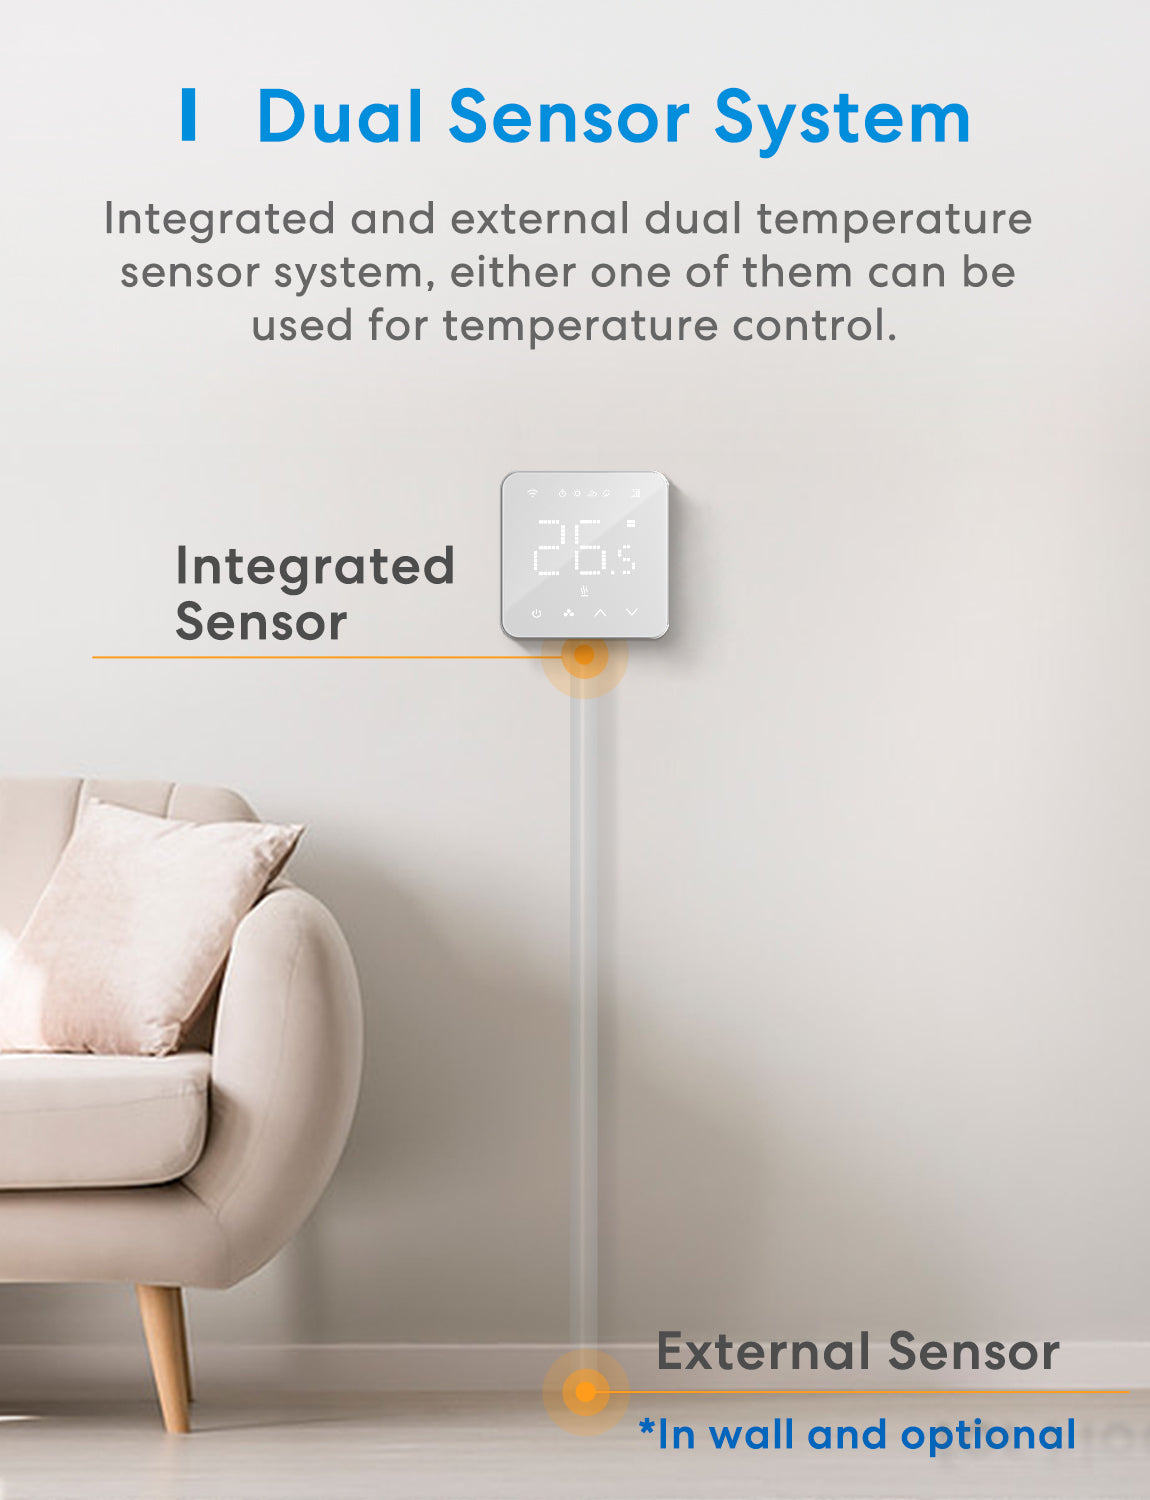 Thermostat connecté WIFI Smart MEROSS MTS200